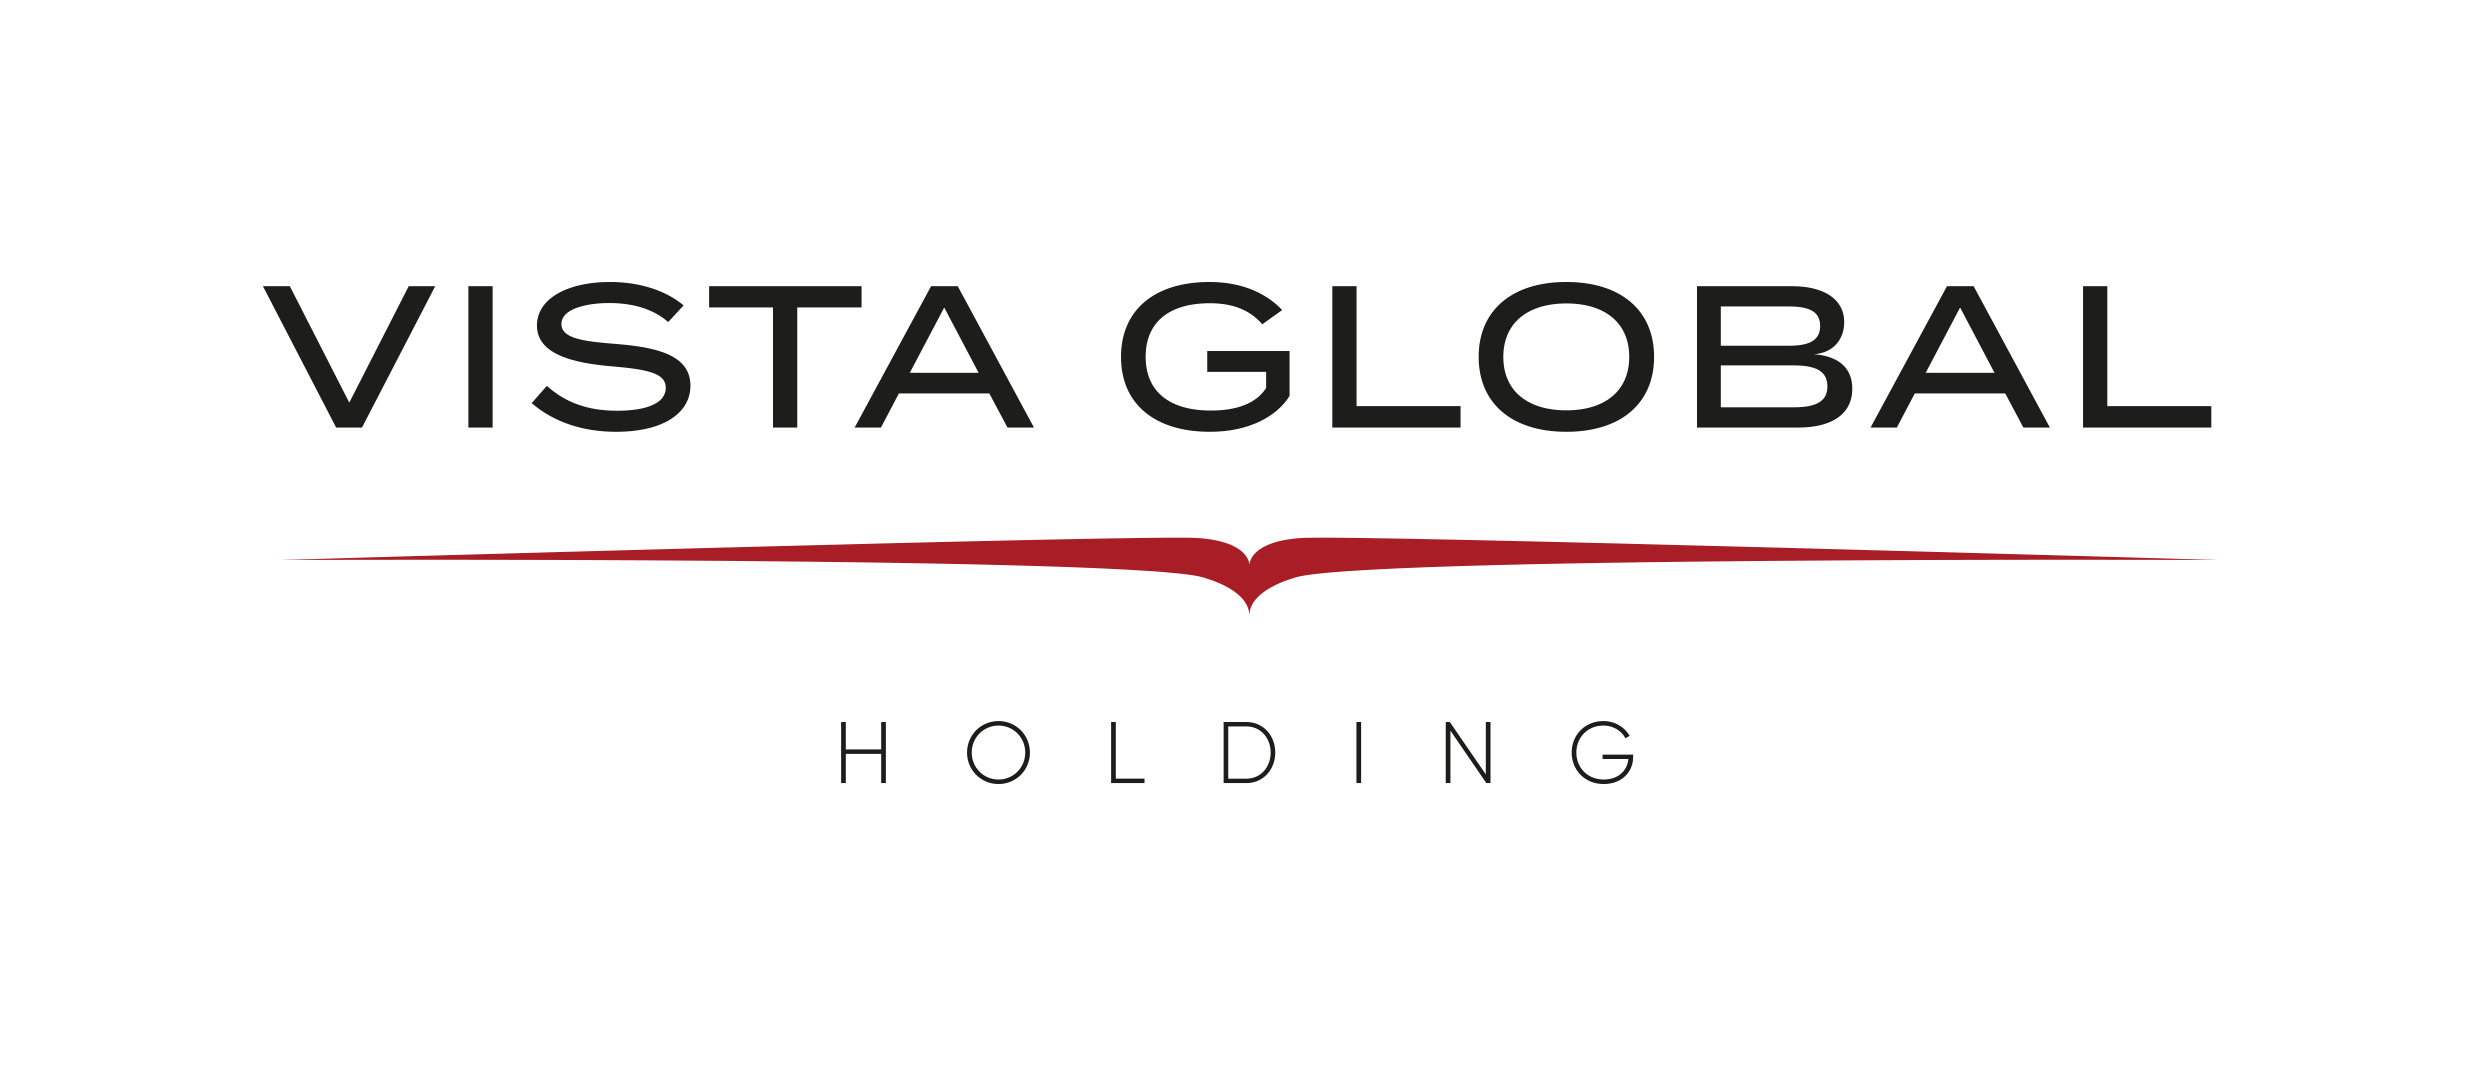 Vista Global Holding Logo